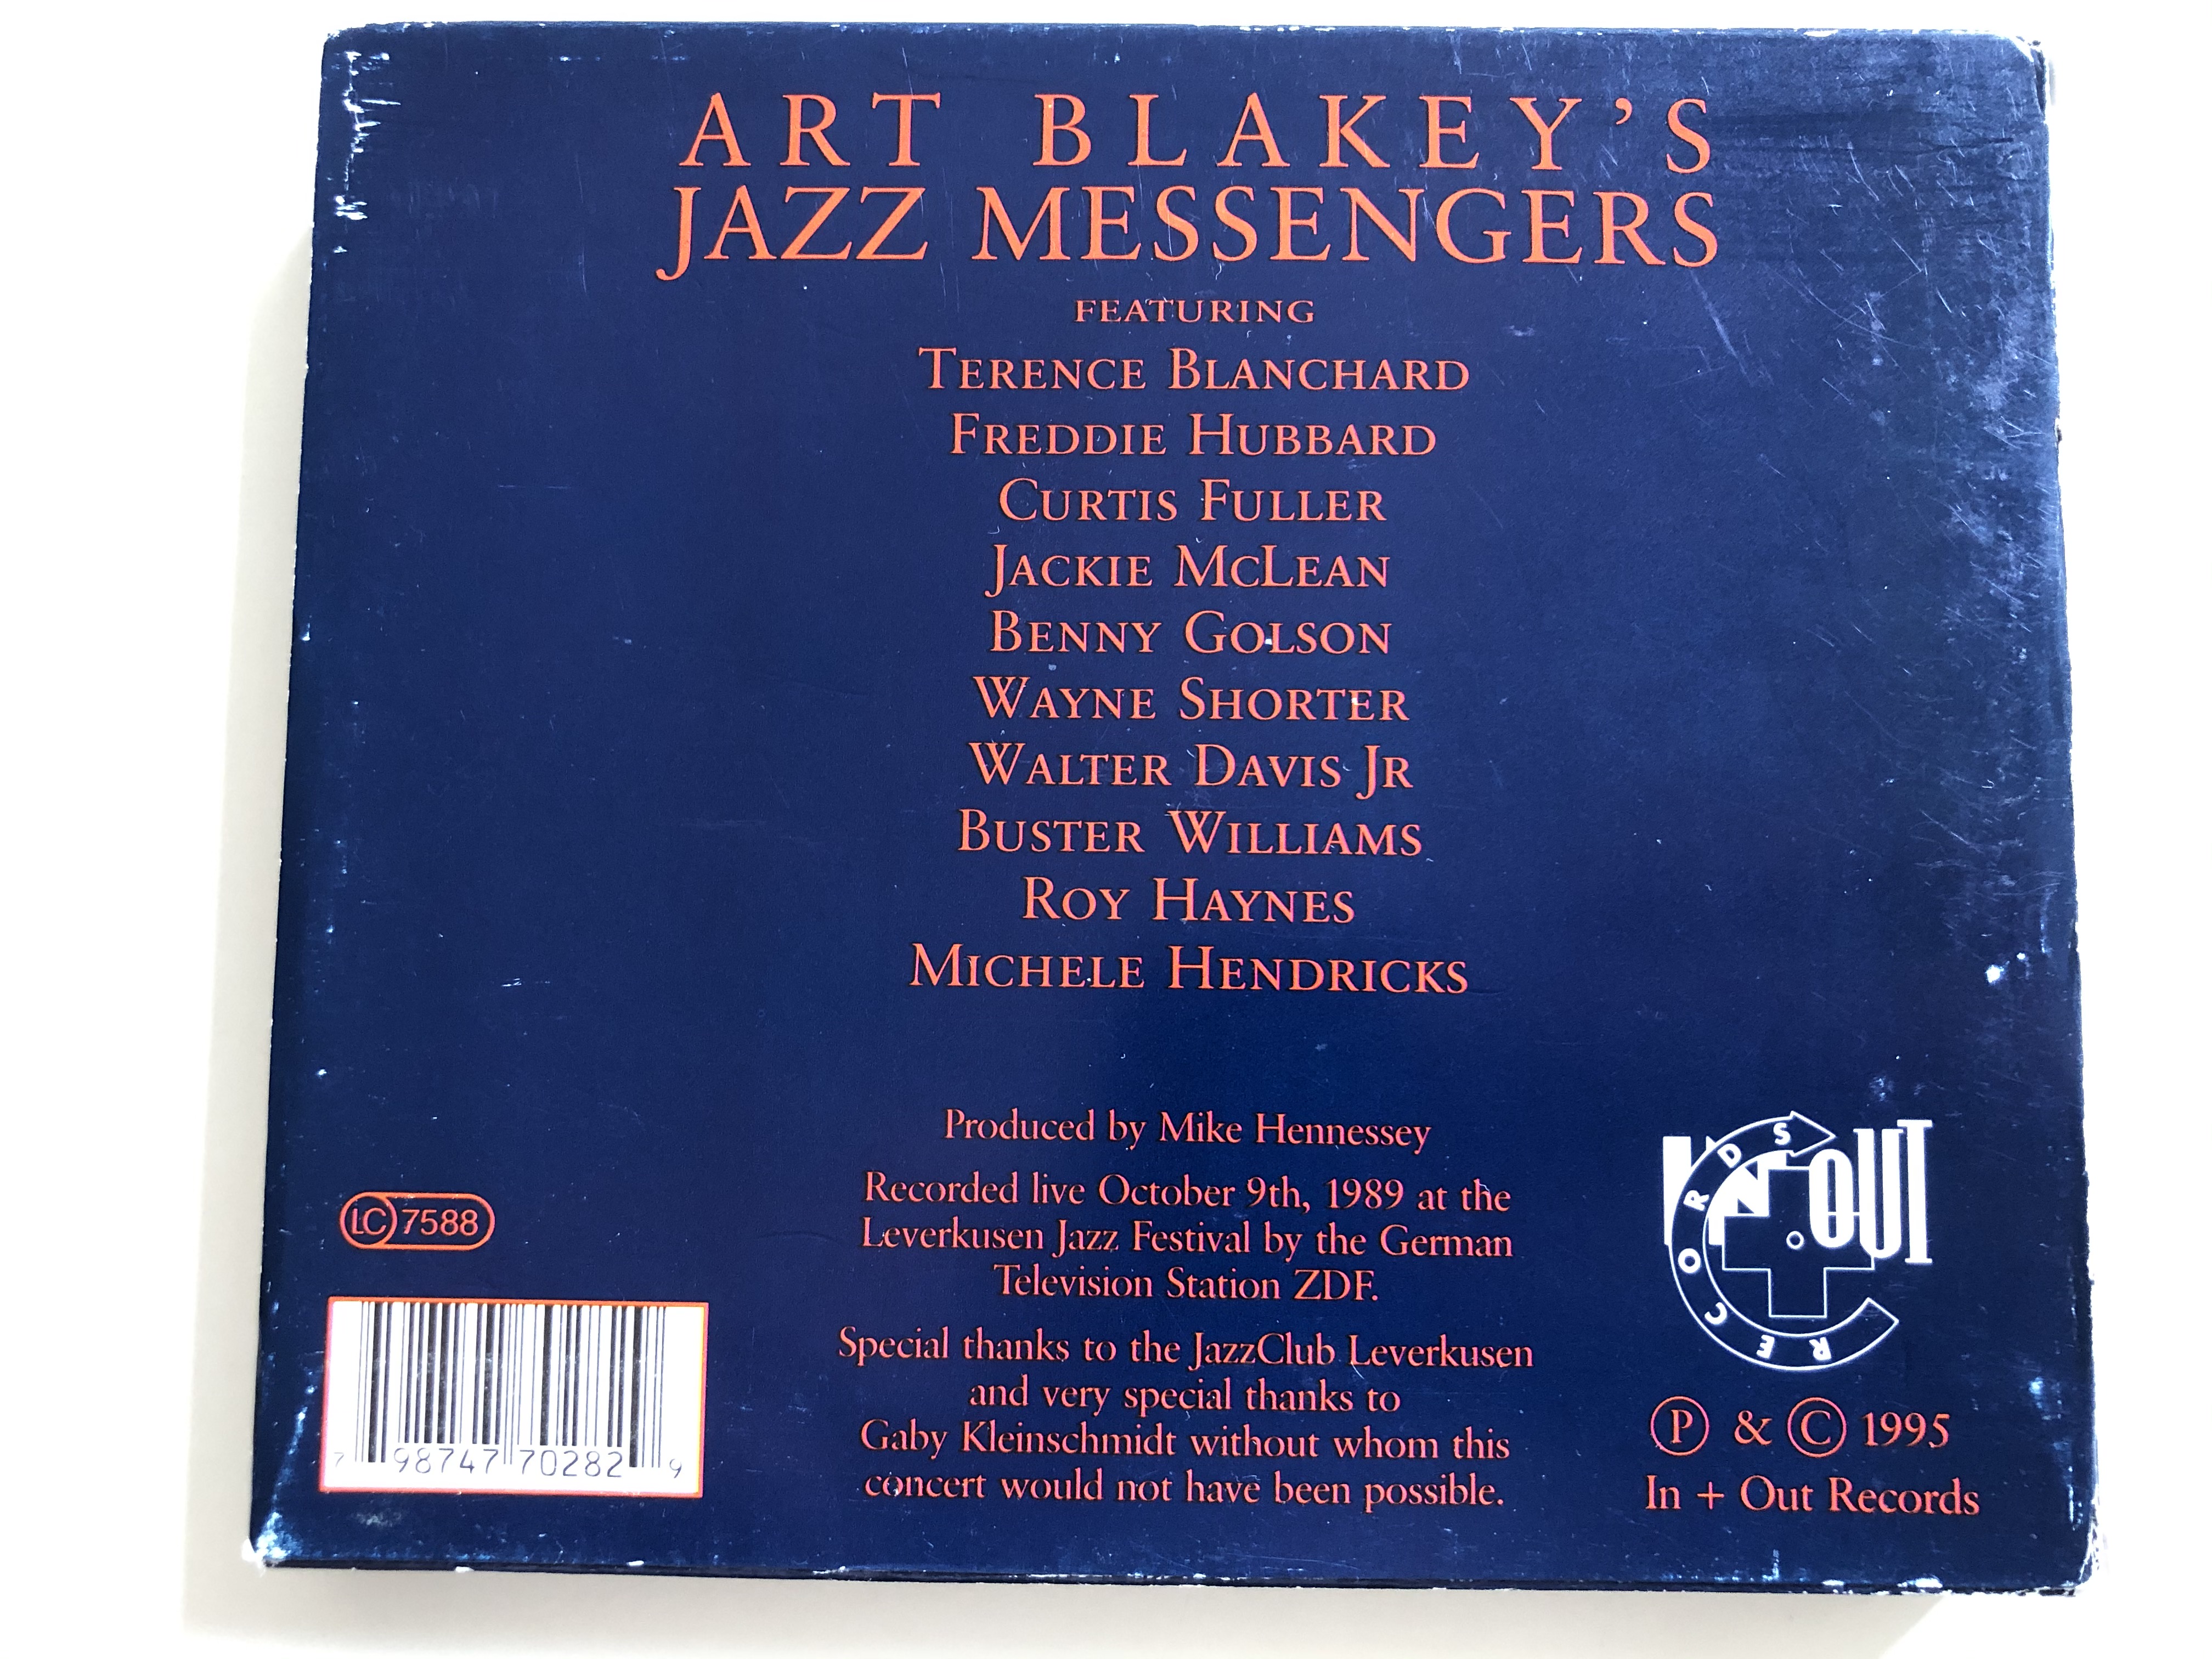 art-blakey-s-jazz-messengers-live-in-leverkusen-the-art-of-jazz-in-out-records-audio-cd-1995-ior-77028-2-2-.jpg